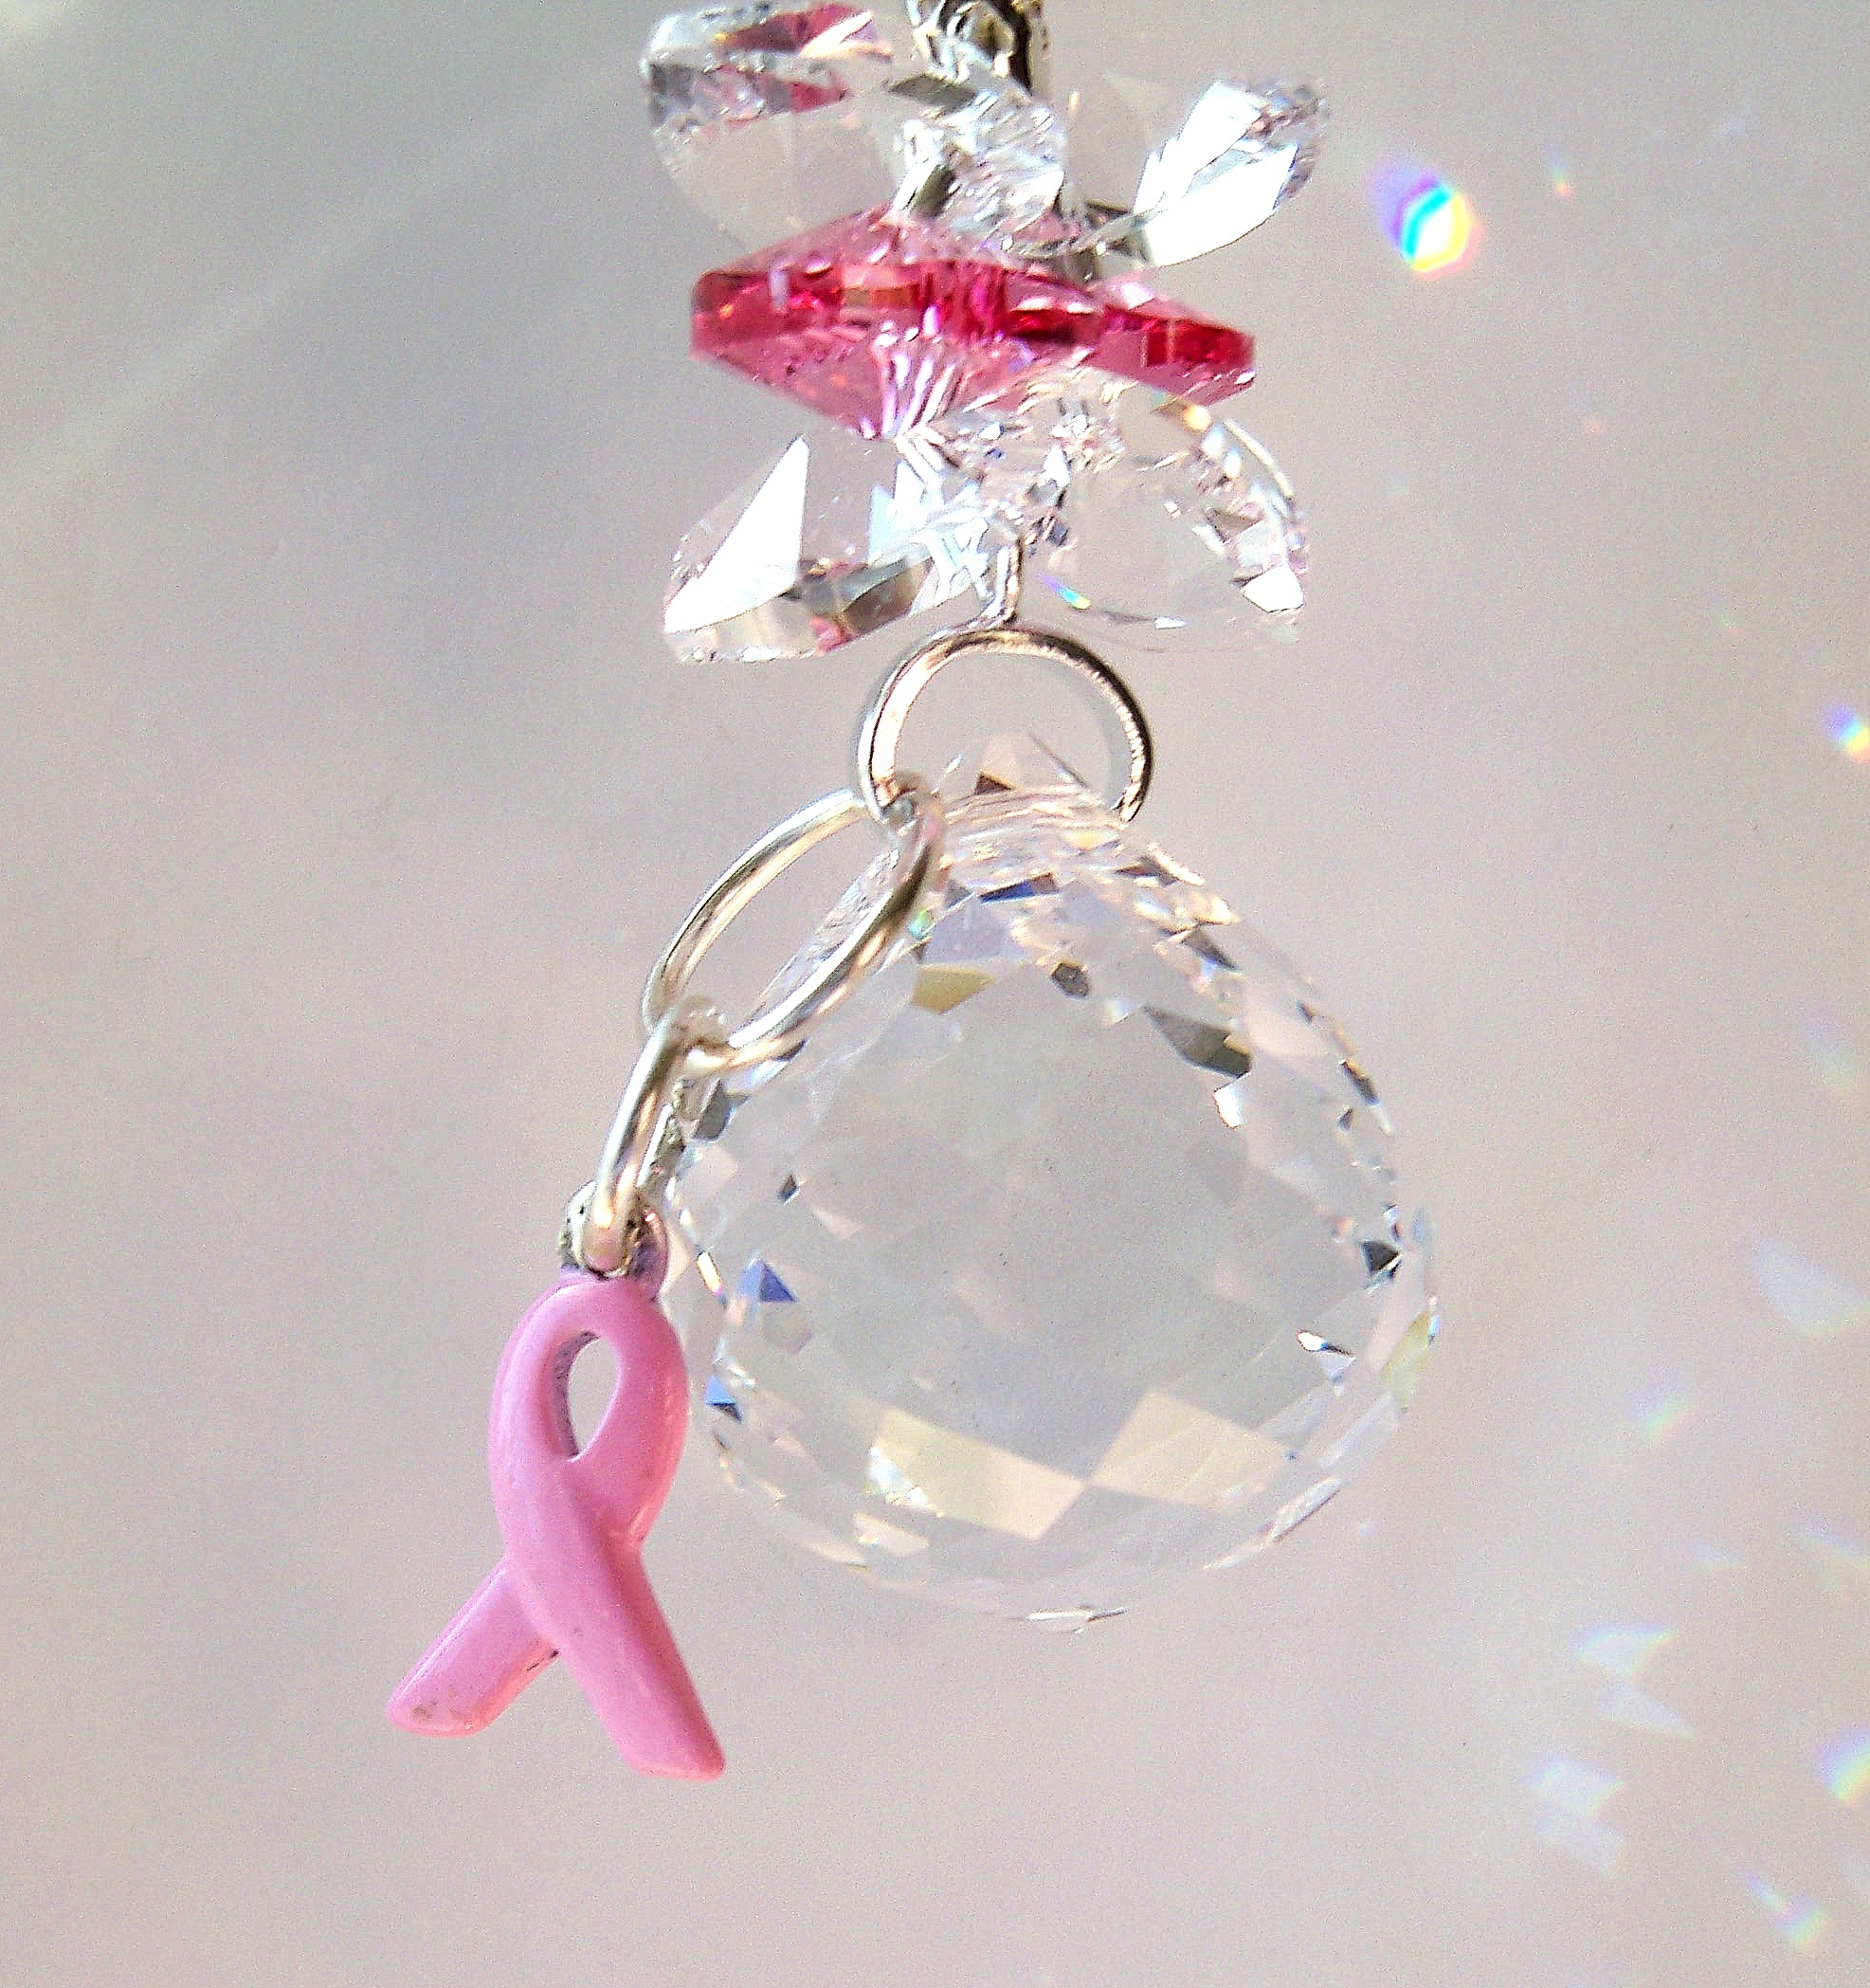 Suncatcher pink ribbon breast cancer